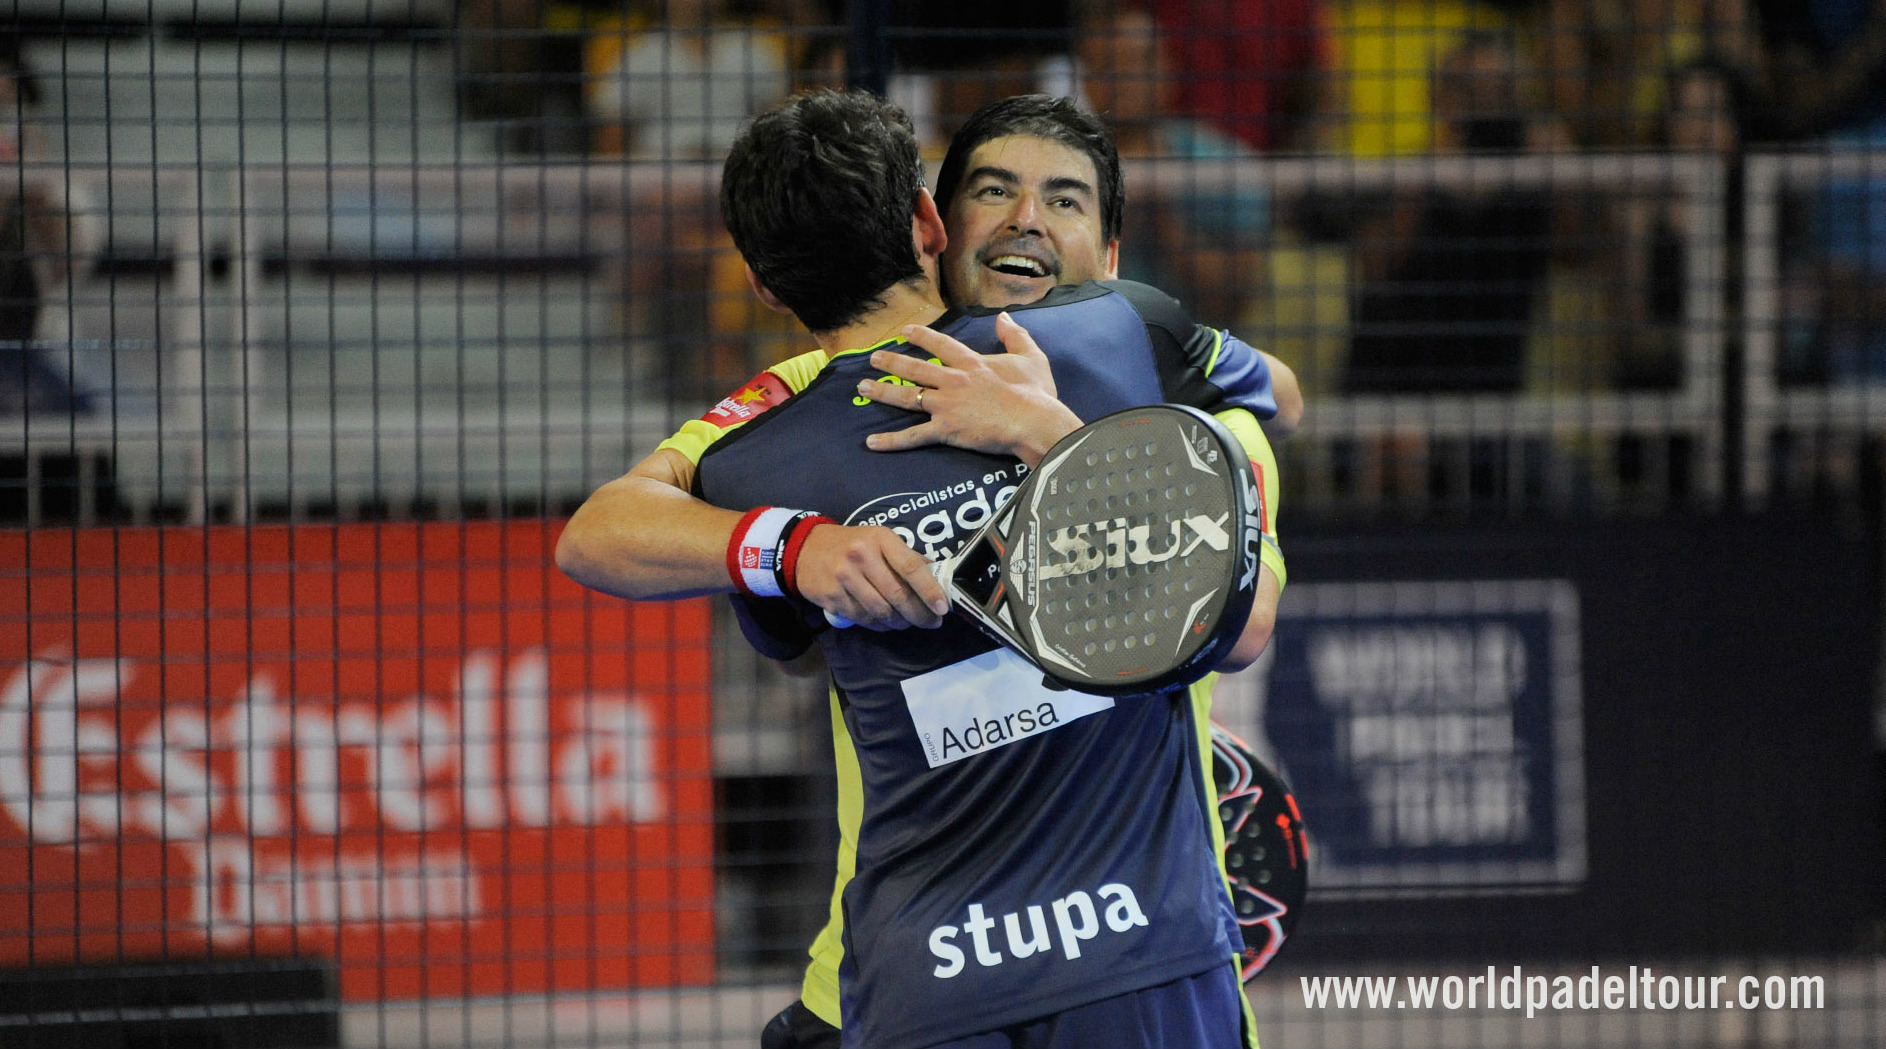 Franco Stupaczuk y Cristian Gutiérrez. 3 títulos.